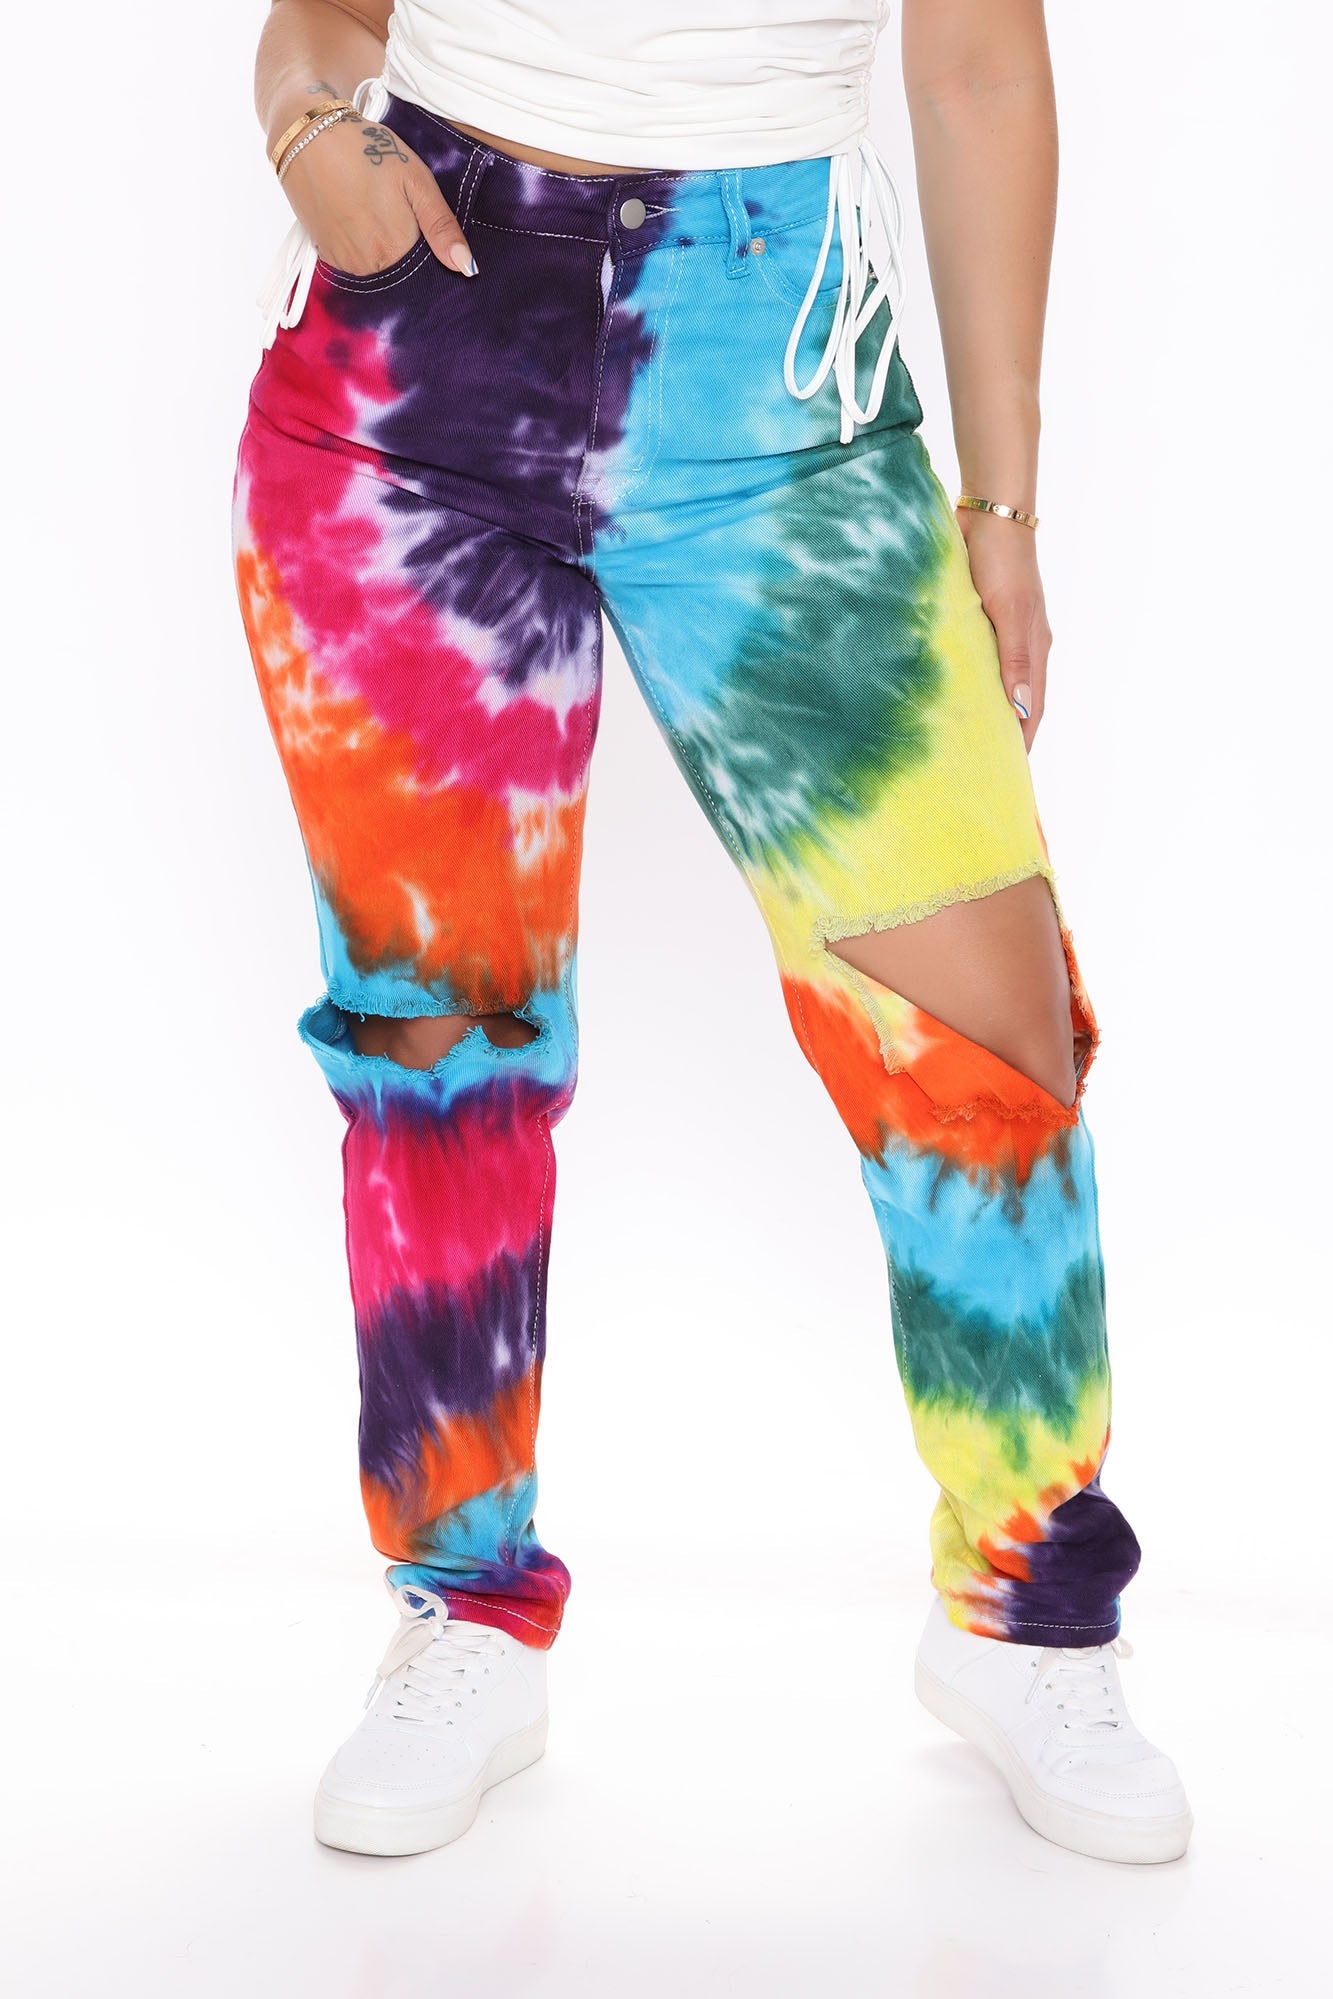 CHKOKKO trackpants_men_westernwear : Buy CHKOKKO Multi-color Men Sports Gym  Track Pant Running Lower Online | Nykaa Fashion